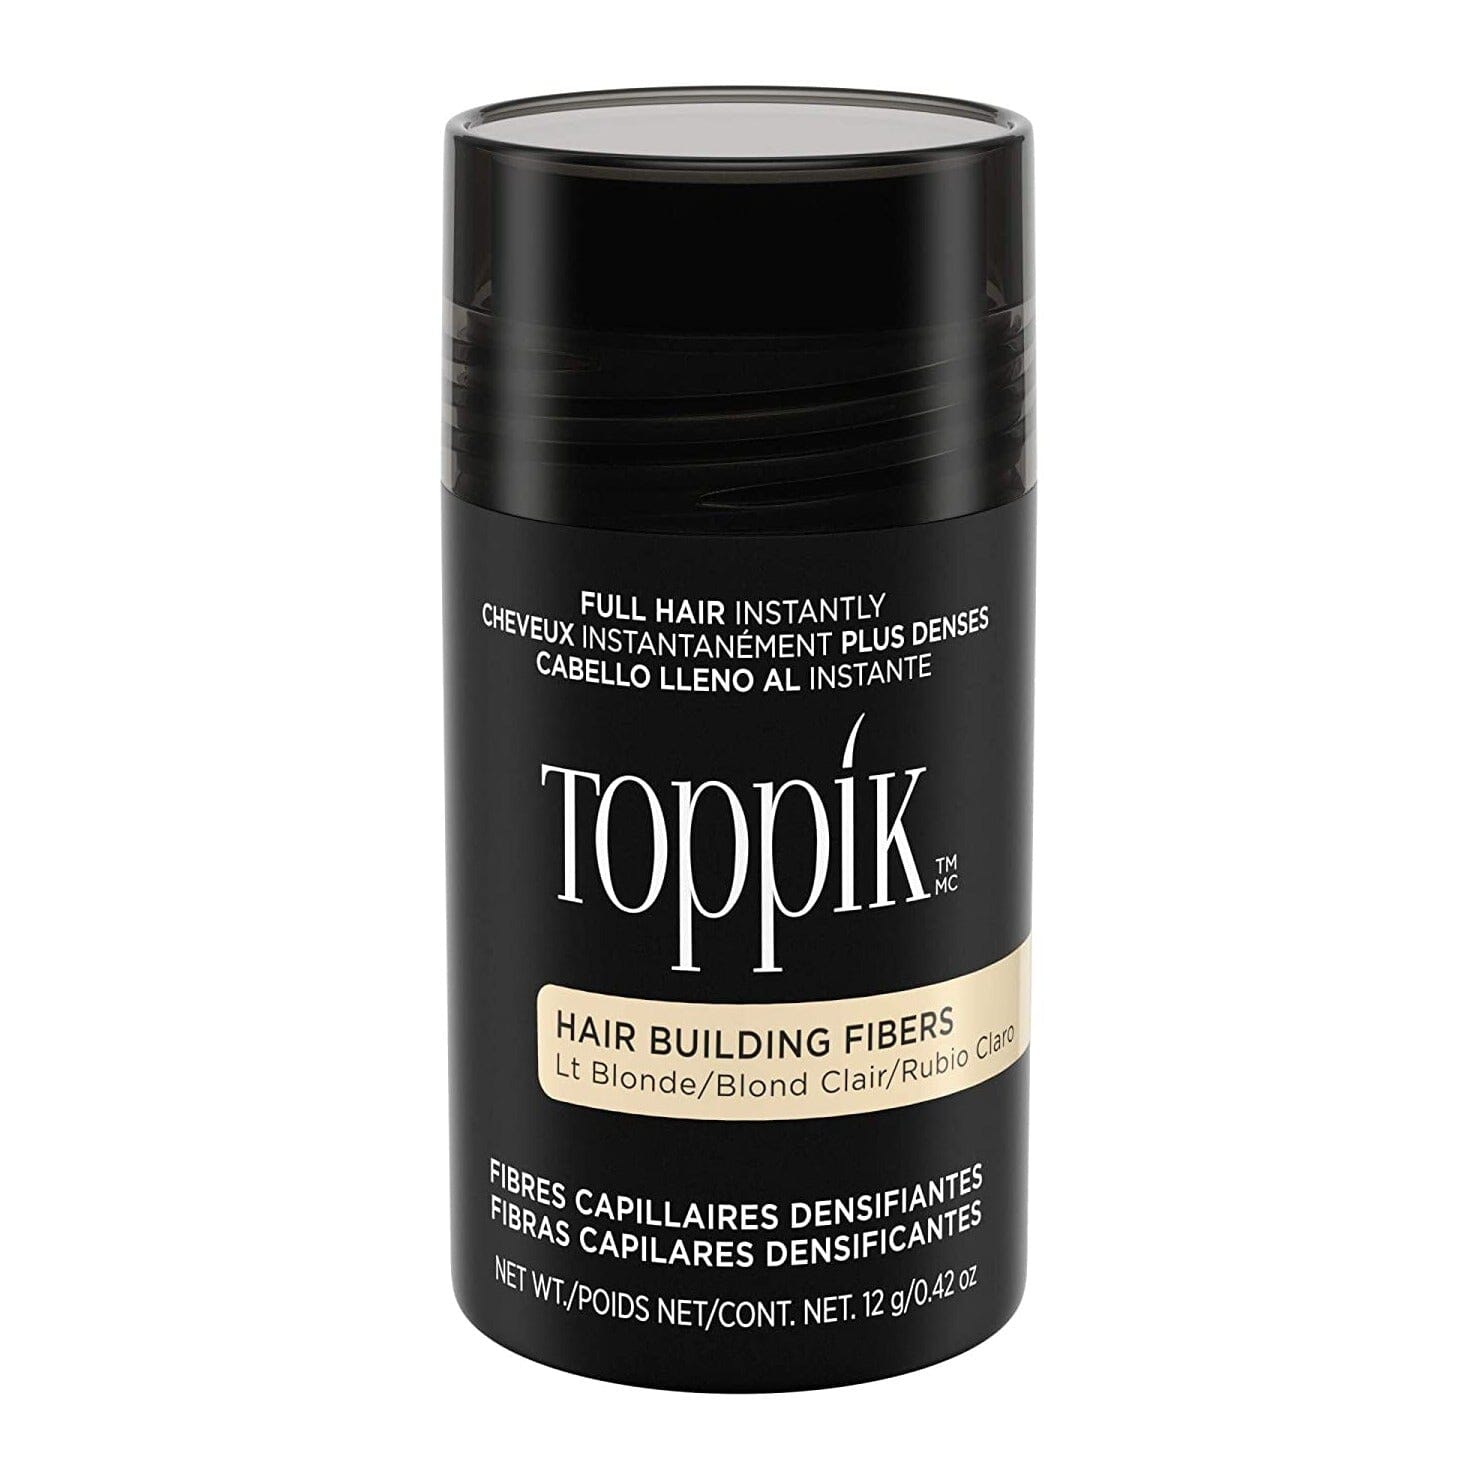 Toppik Hair Building Fibers - LIGHT BLONDE Hair Loss Concealers Toppik 0.42 oz Shop at Exclusive Beauty Club